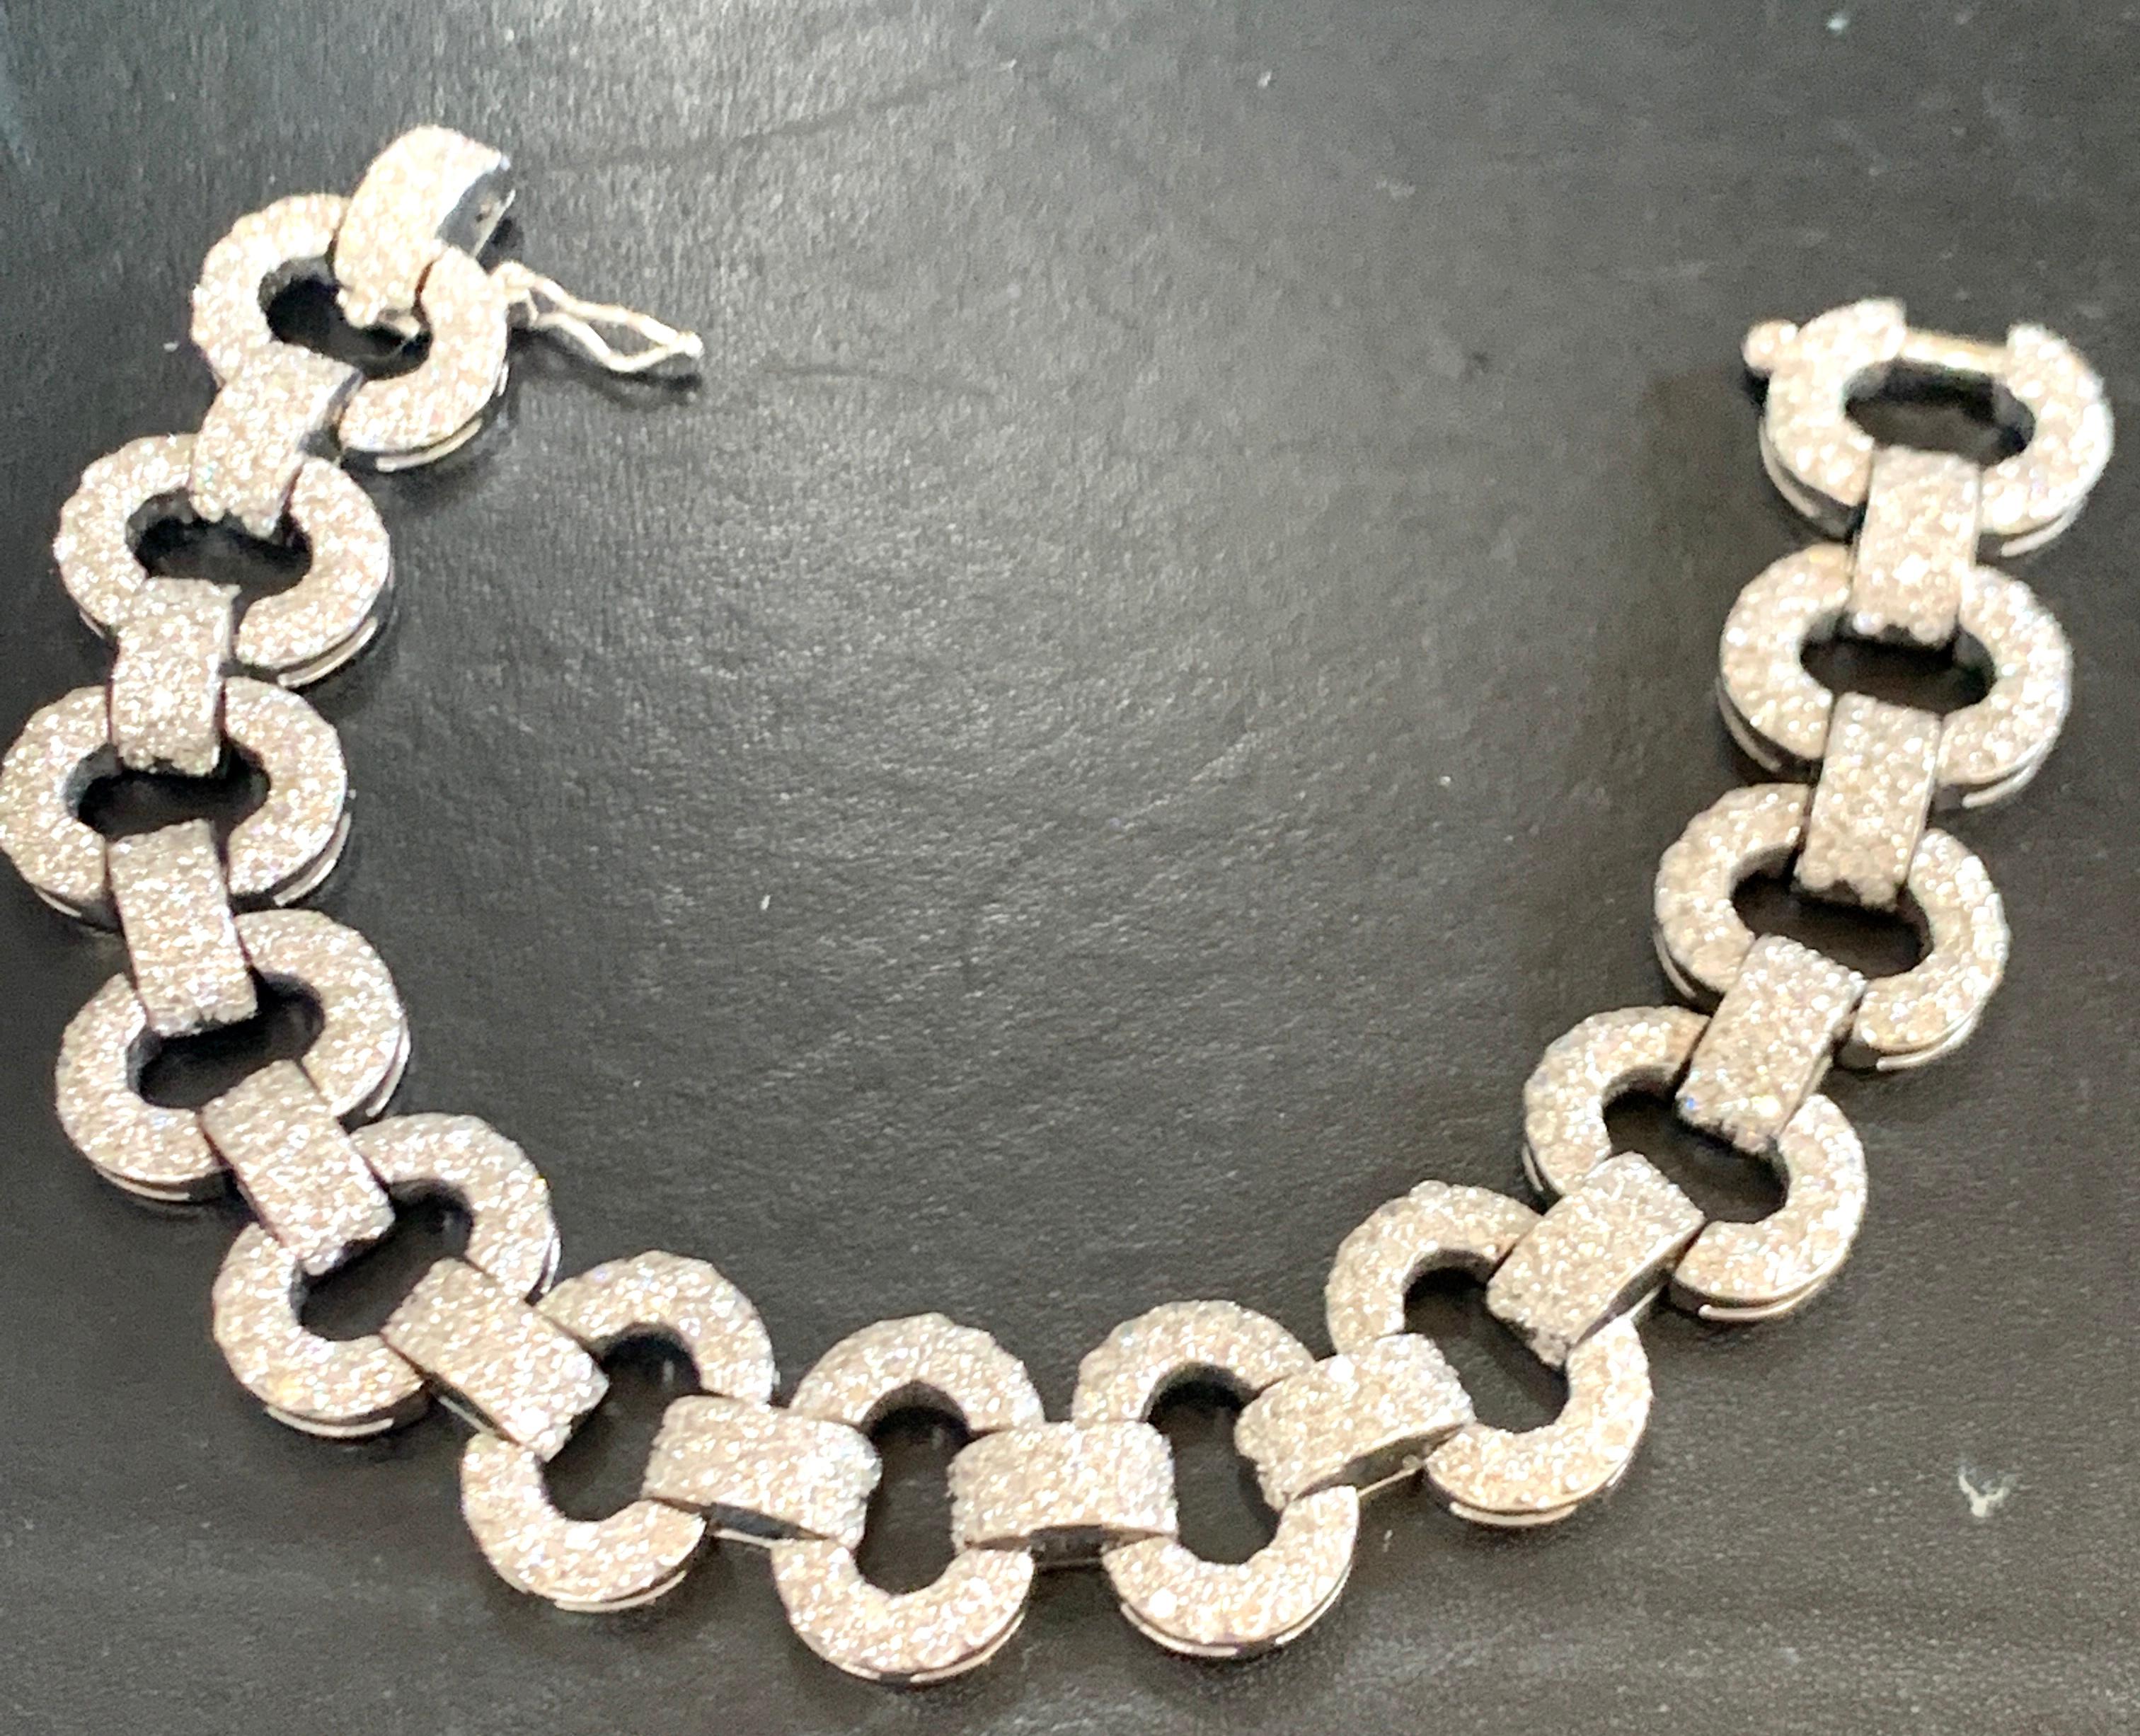 15 Carat Diamond Bracelet in 18 Karat White Gold, 63 Grams, Estate 3